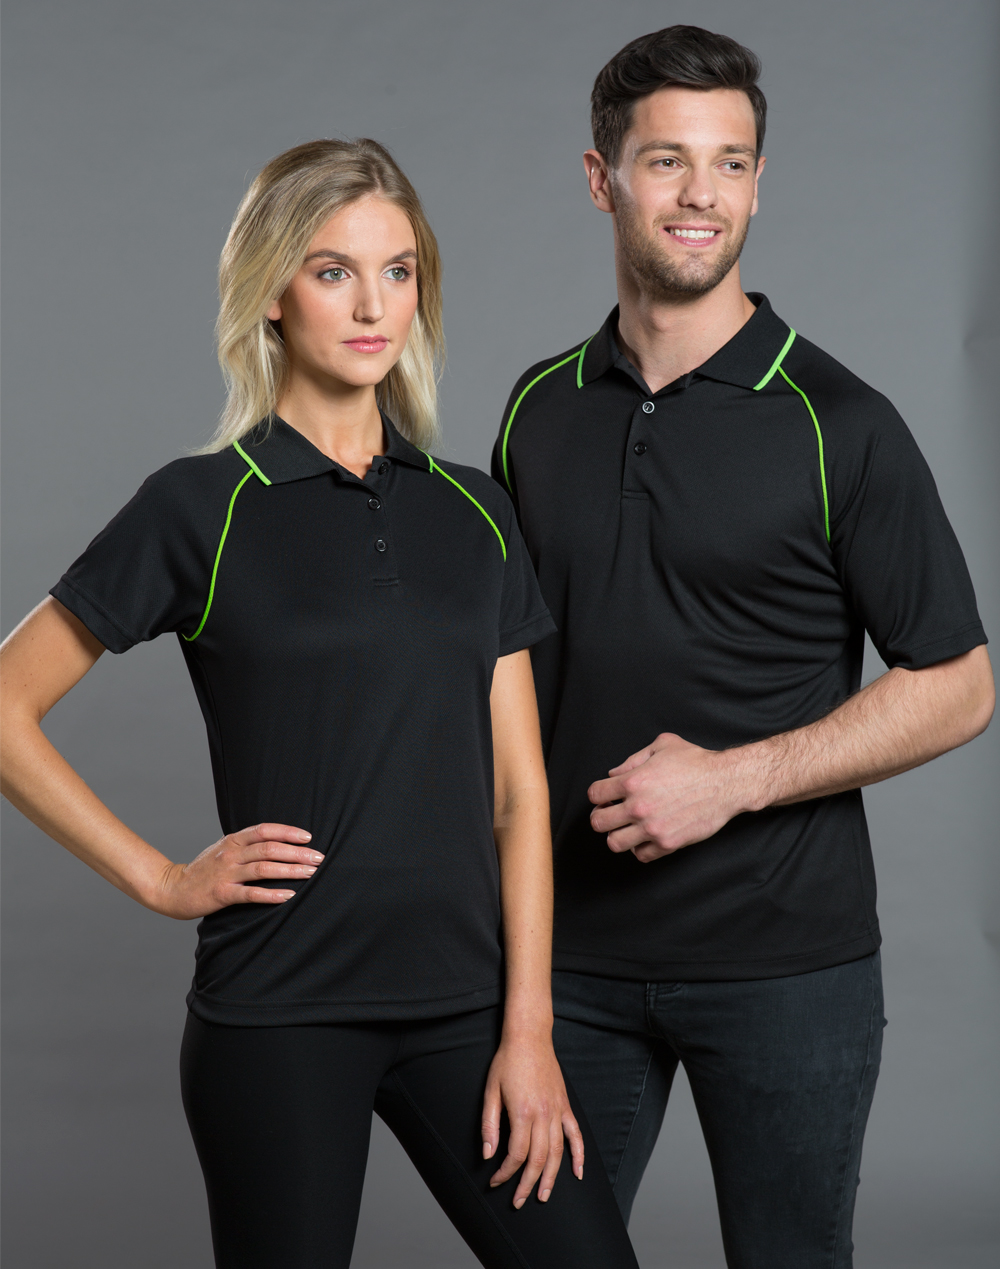 Custom Made Men's Champion Raglan Polo Shirts Online in Perth Australia